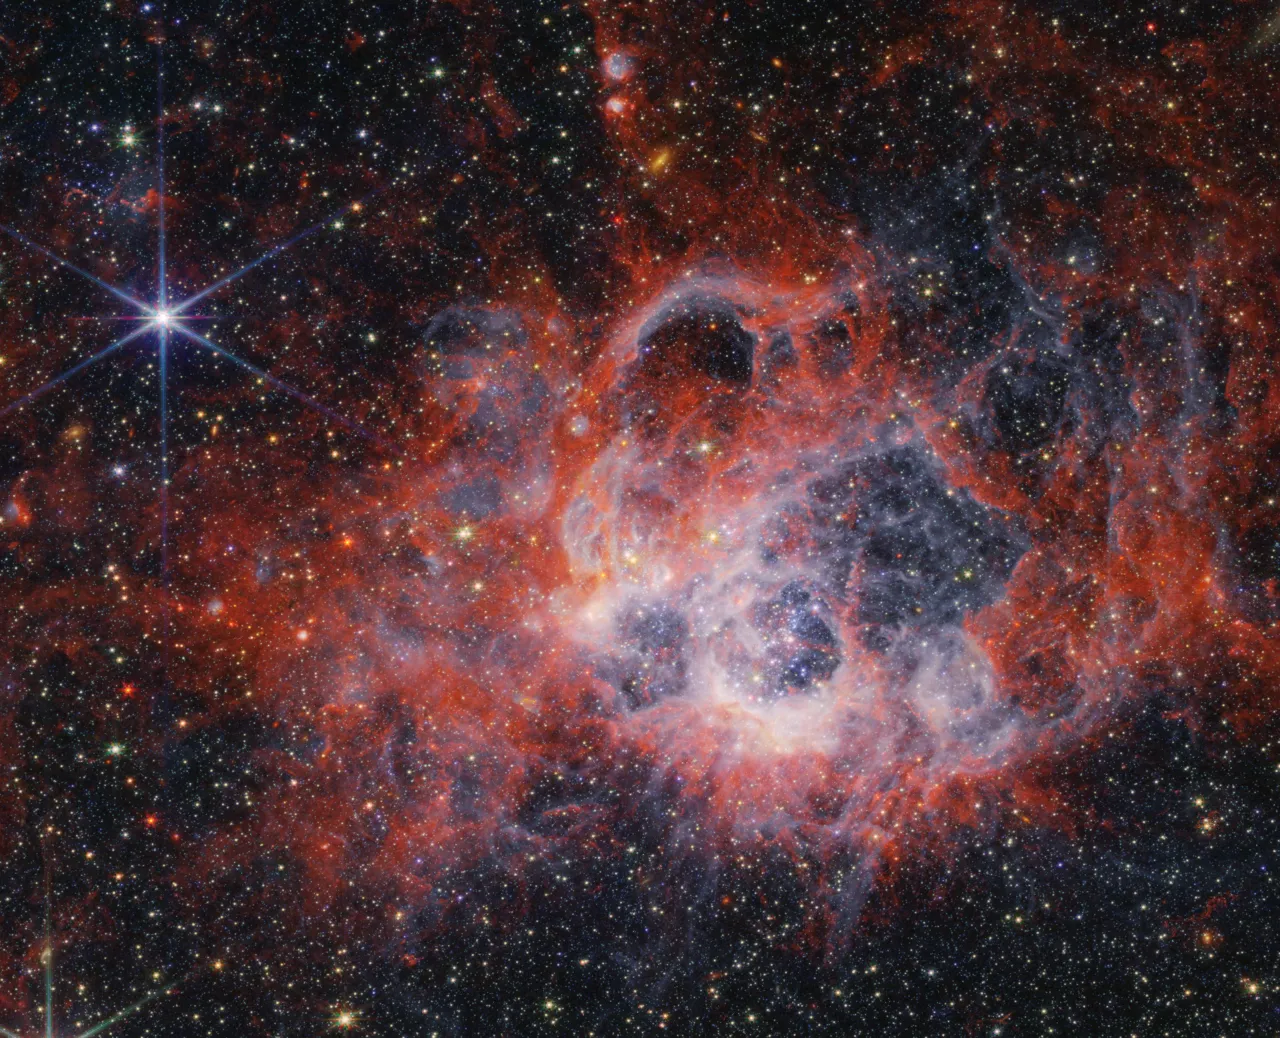 Webb telescope views star-forming region NGC 604 | Science-Environment